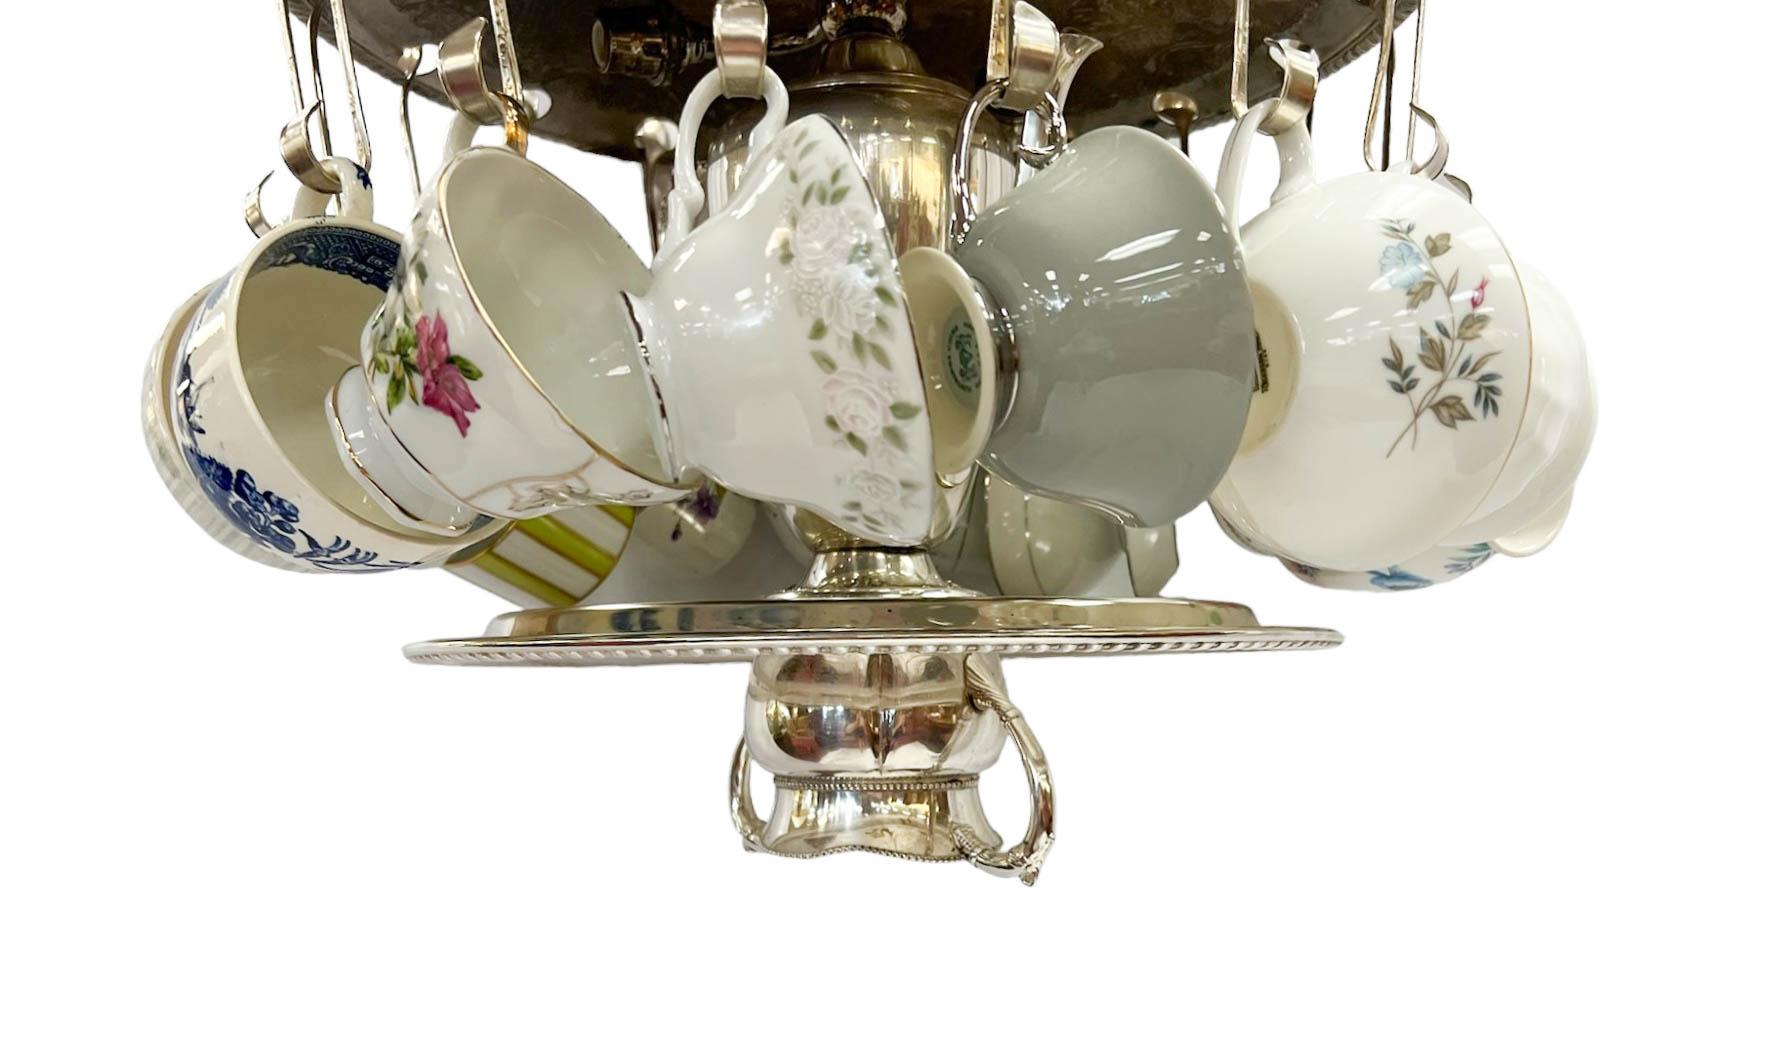 Vintage One-Of-A-Kind Handcrafted Teacup Chandelier For Sale 1